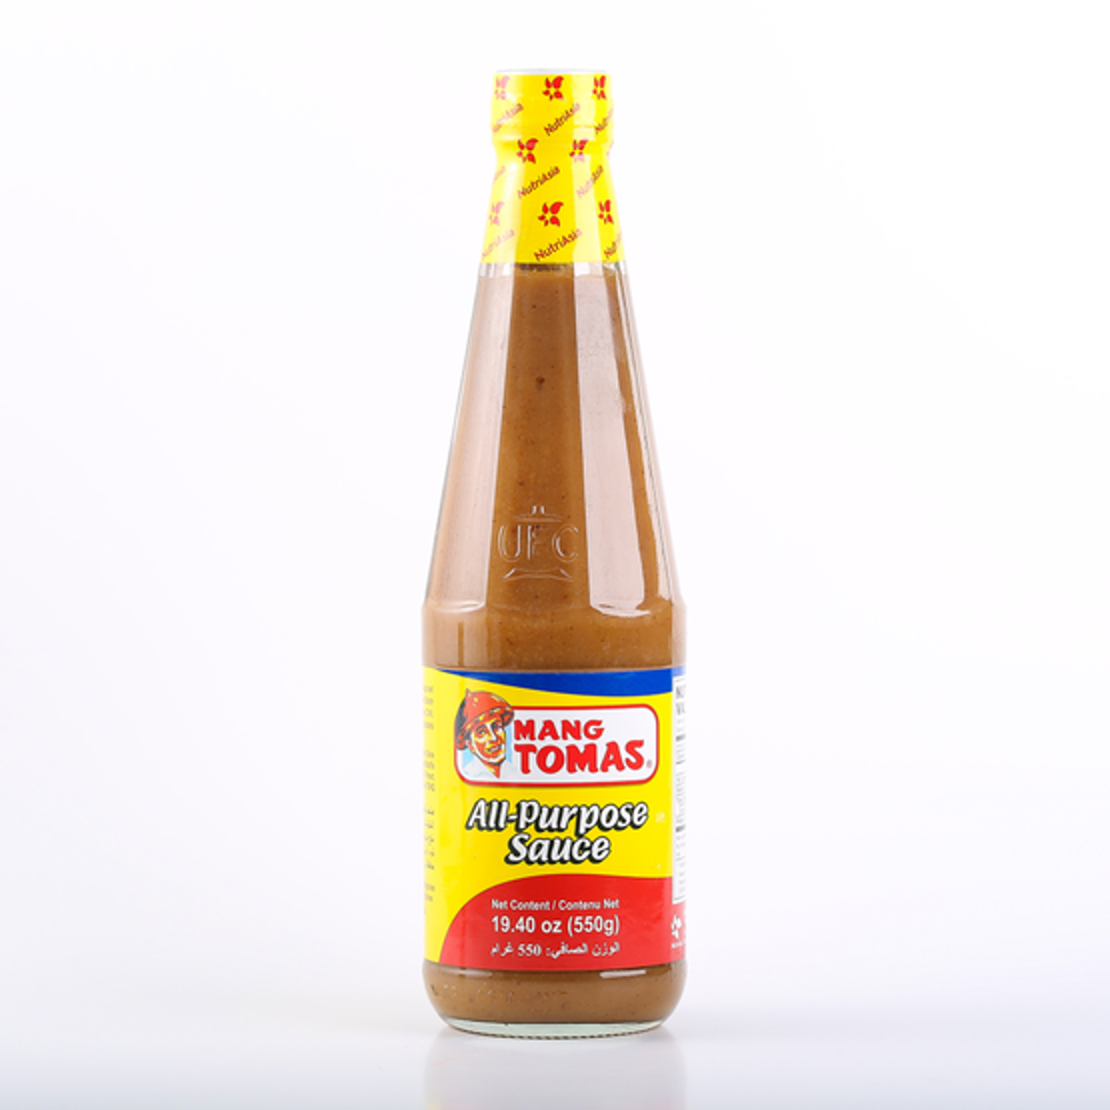 Big Mang Tomas All-Purpose Sauce 550g